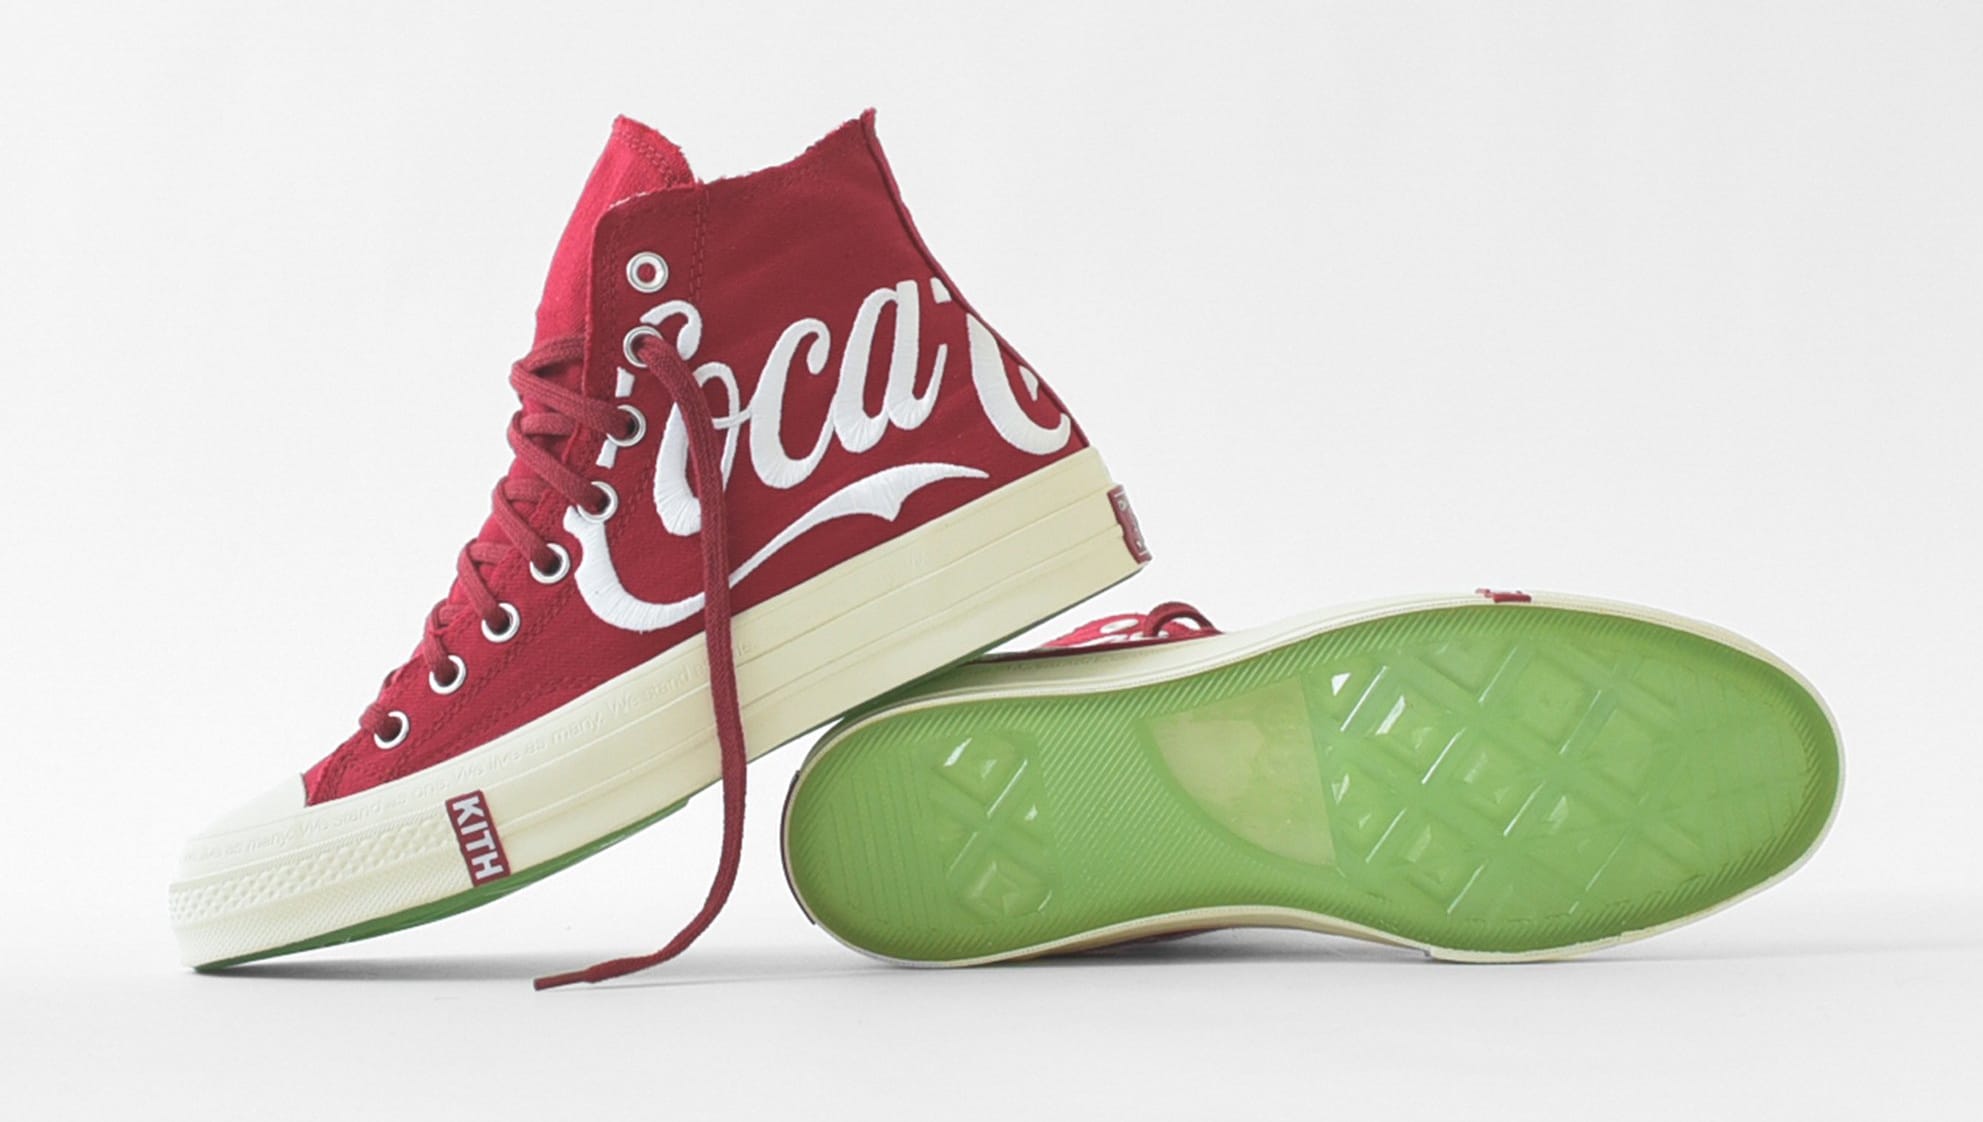 coca cola shoes converse